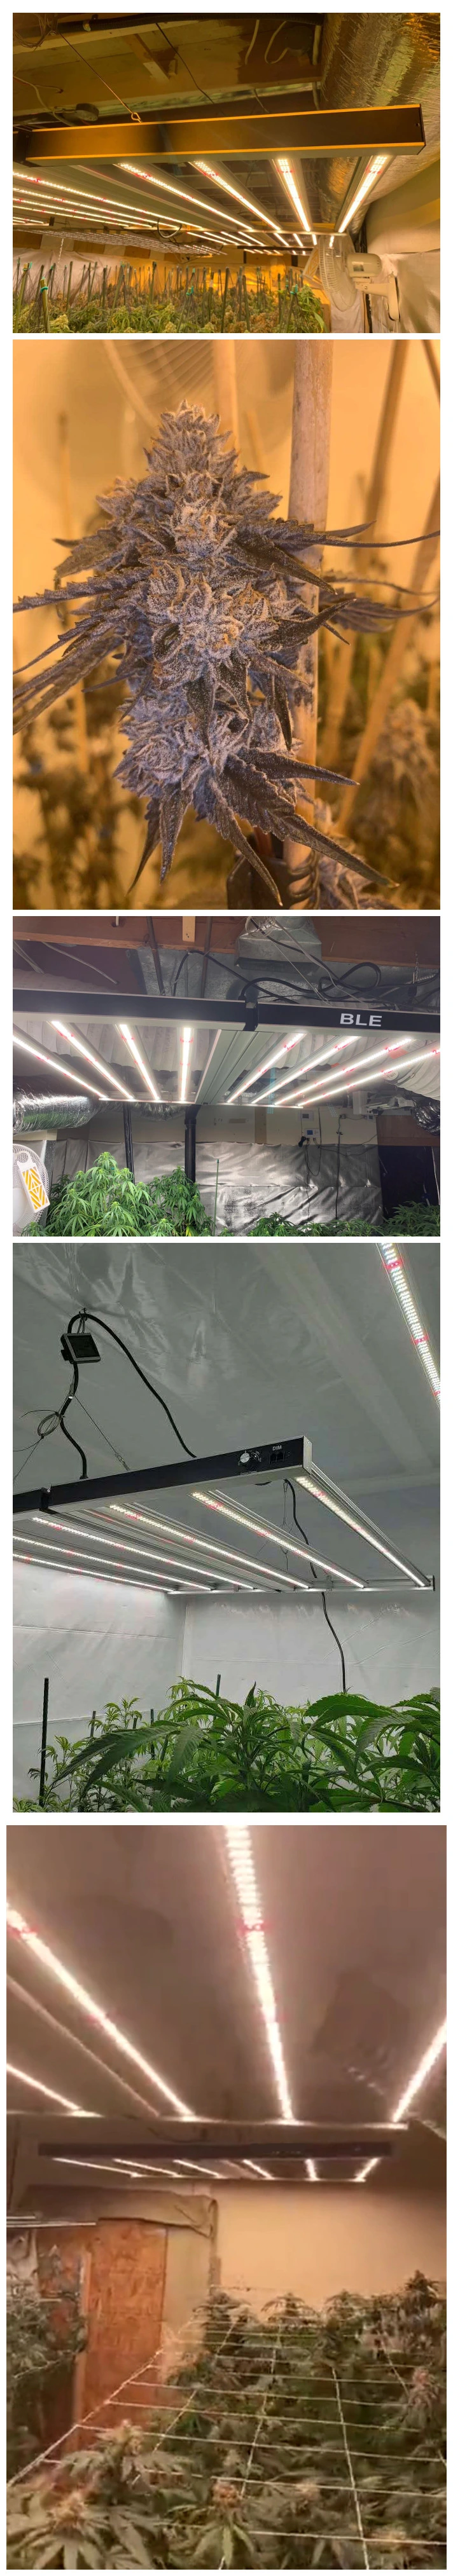 Good Performance Gavita PRO Fluence Full Spectrum LED Grow Lights with UV & IR for Indoor Plants